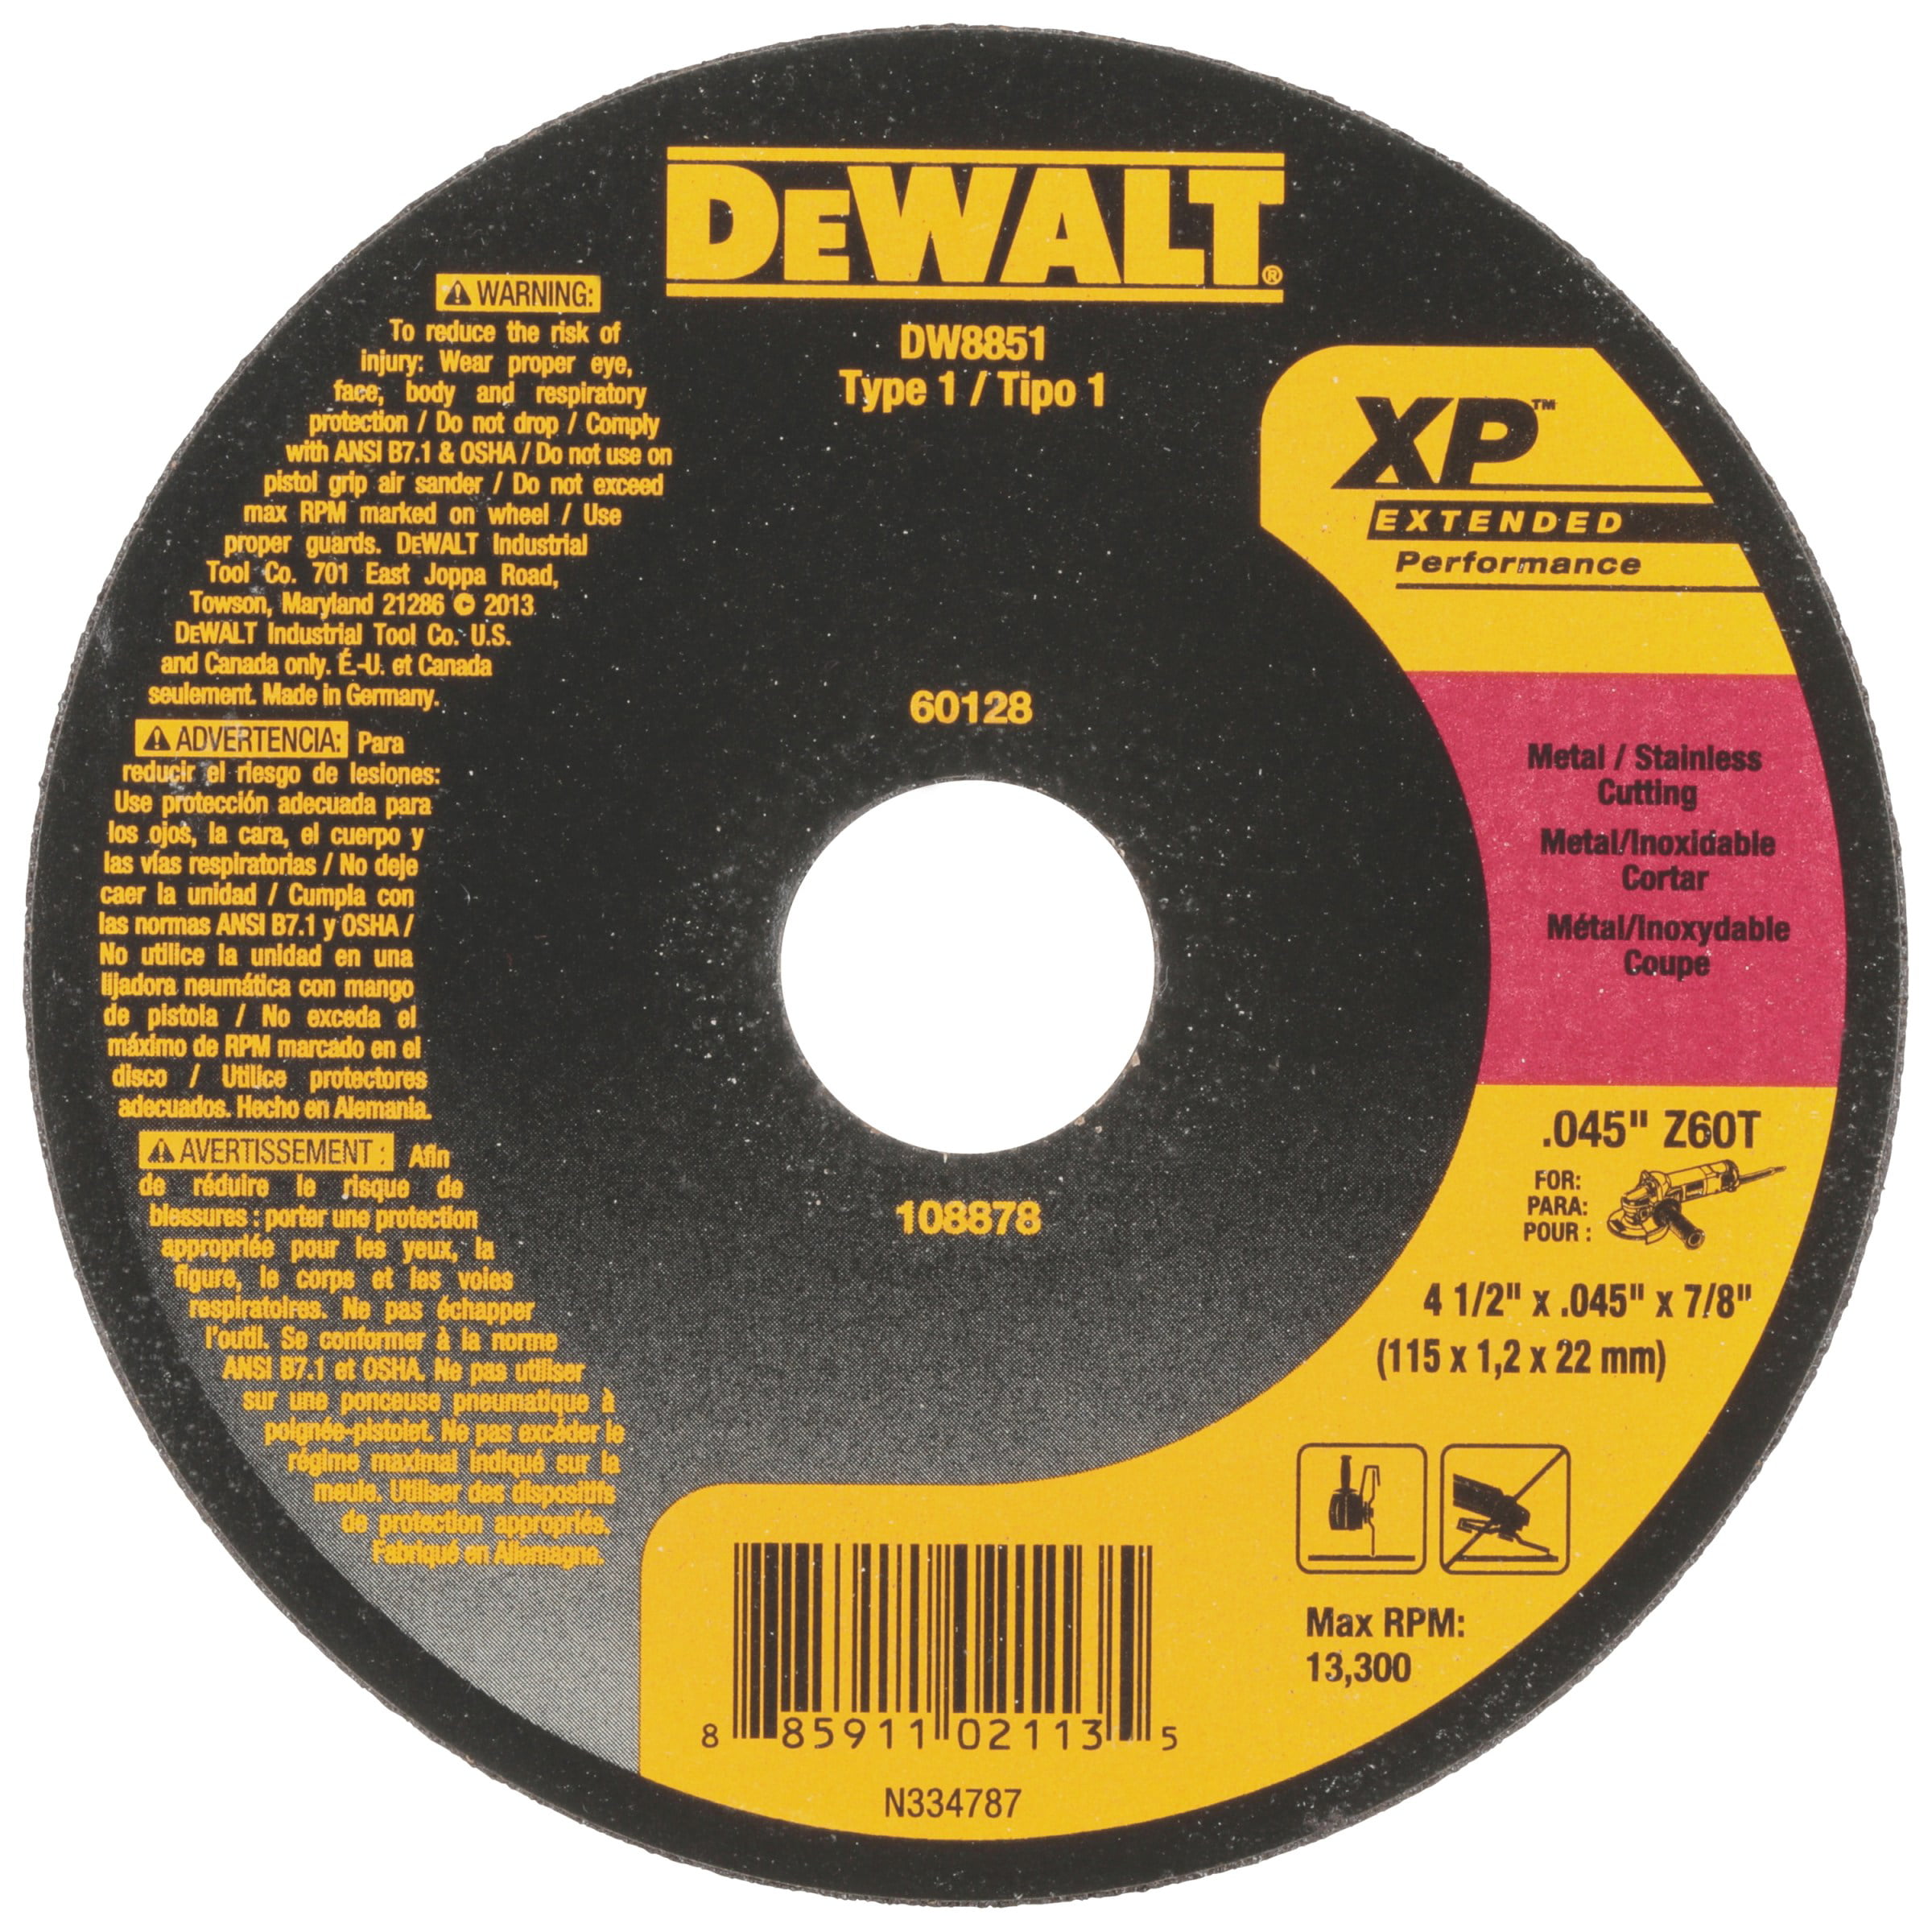 Dewalt DW8062A 4-1/2"x.045"x7/8" T1 Aluminum-Cutting Cut-off Wheels Box of 25 